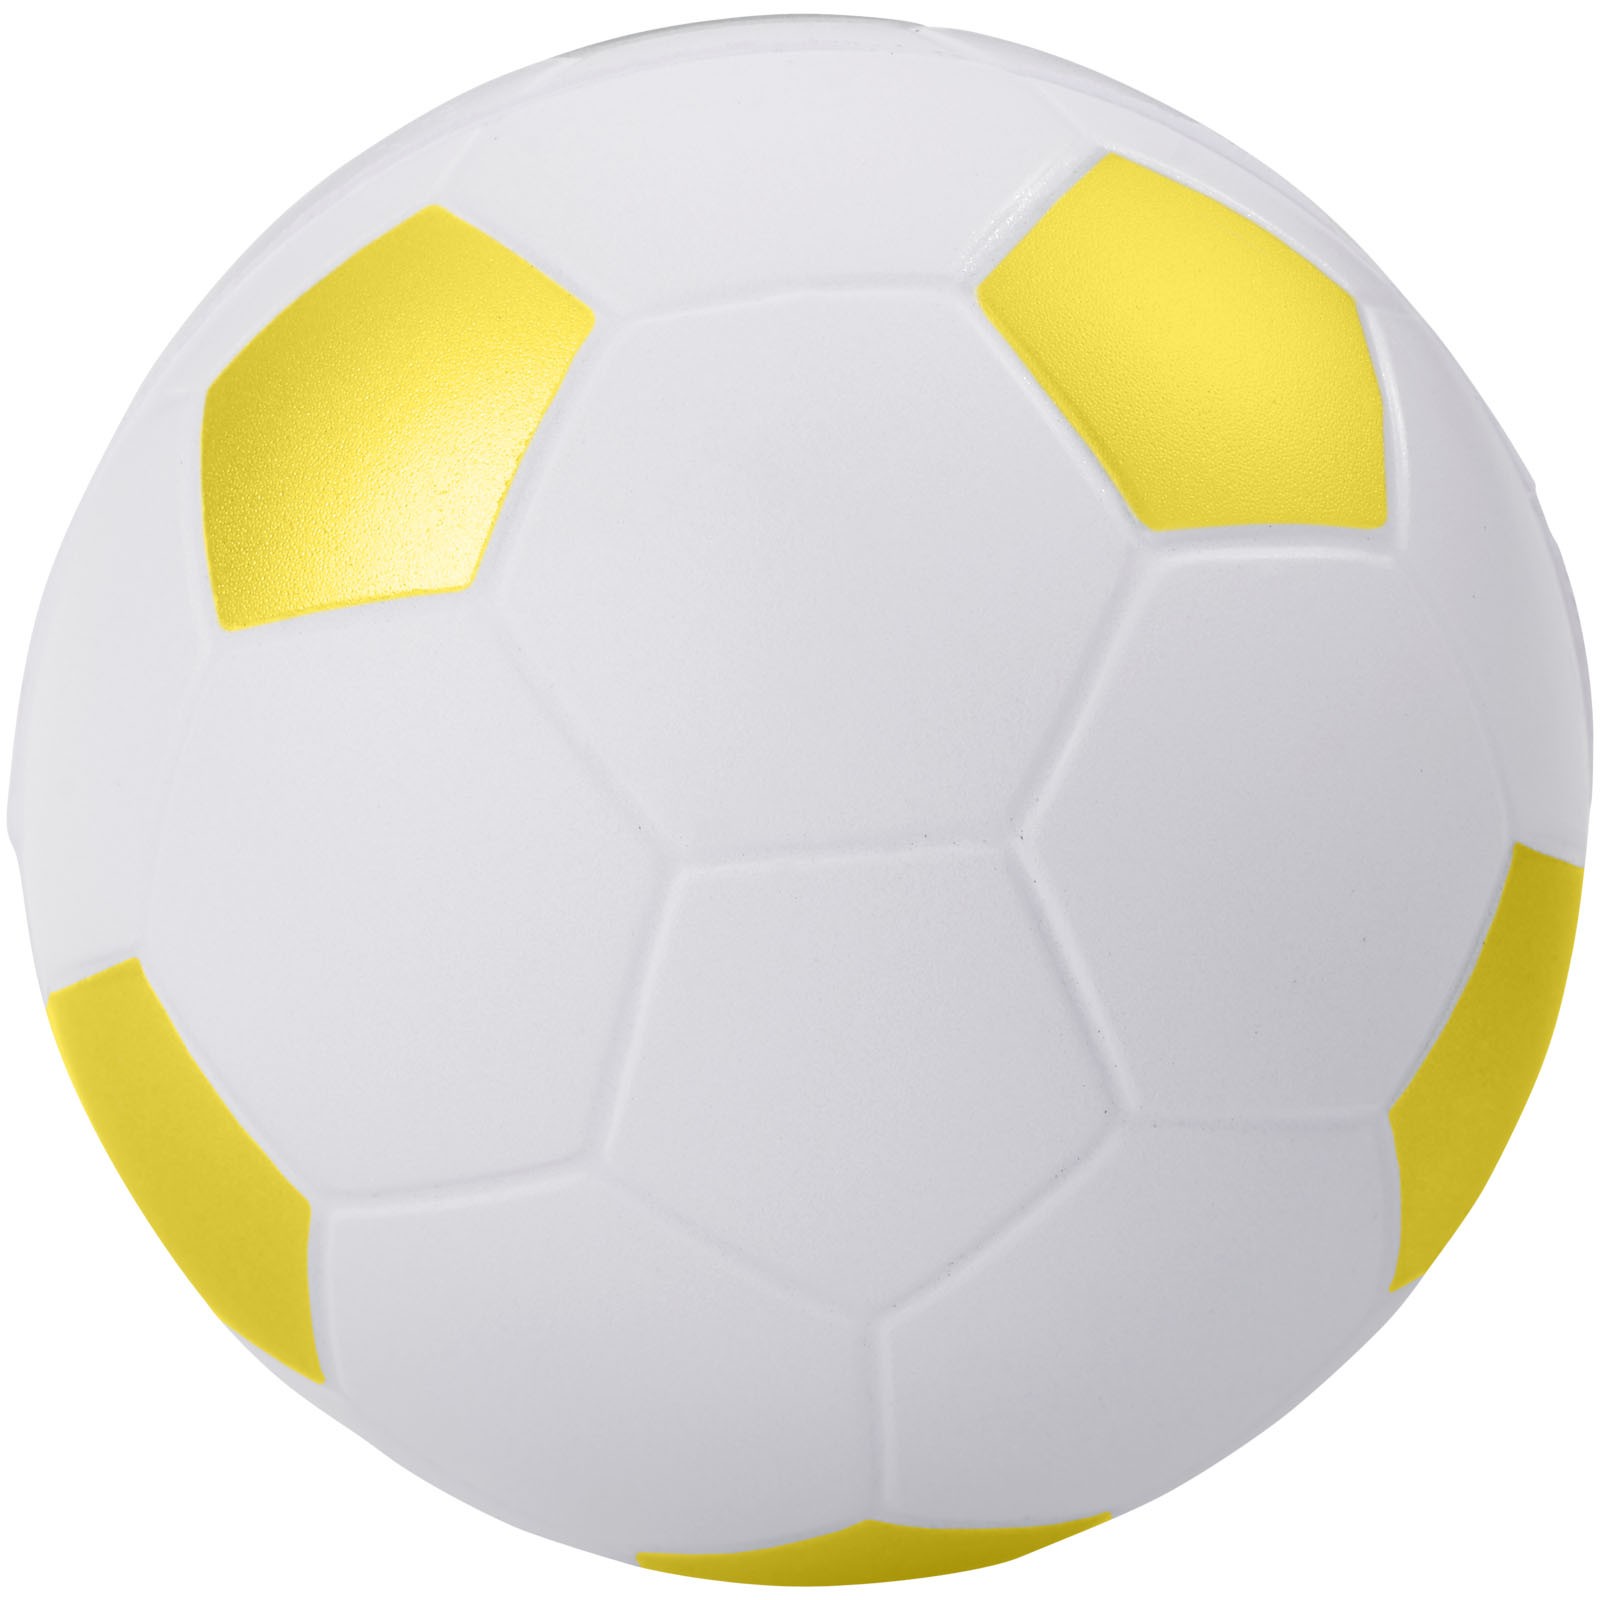 Antistresový míč Football - Žlutá / Bílá